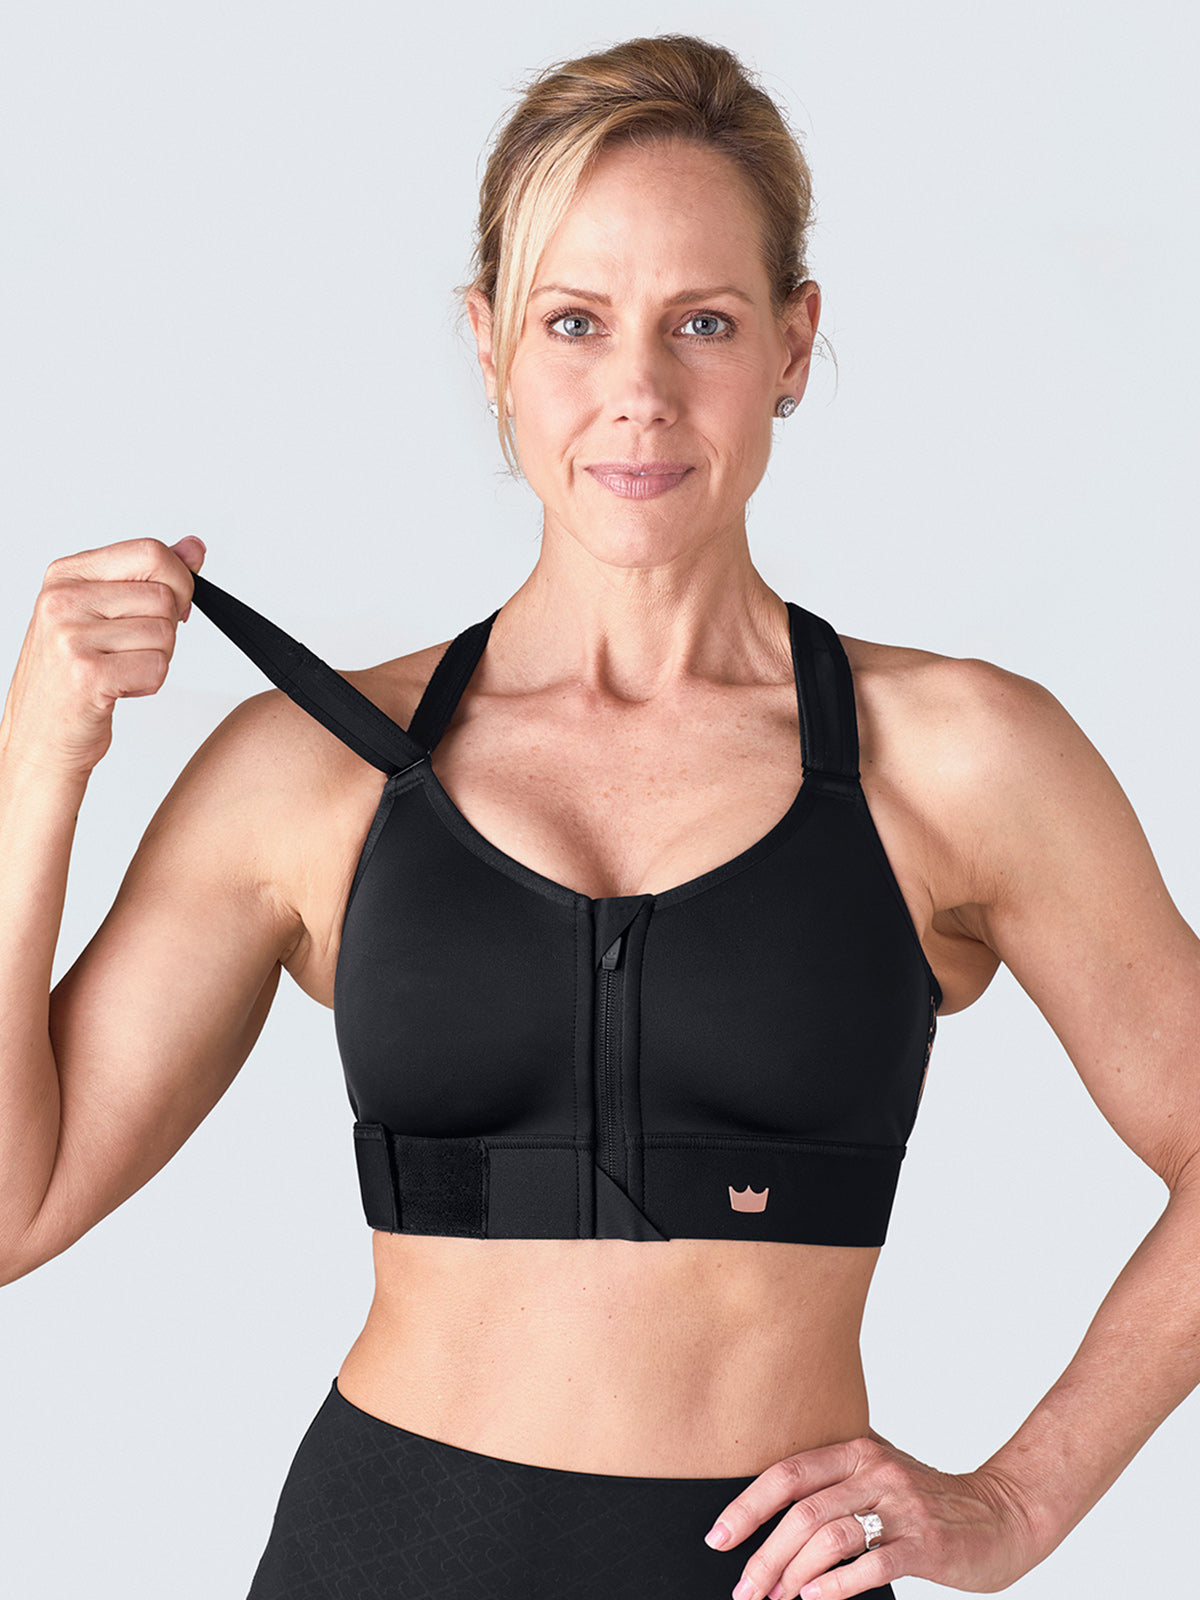 FlexFit Sports Bra and MoveEasy leggings - Revamp